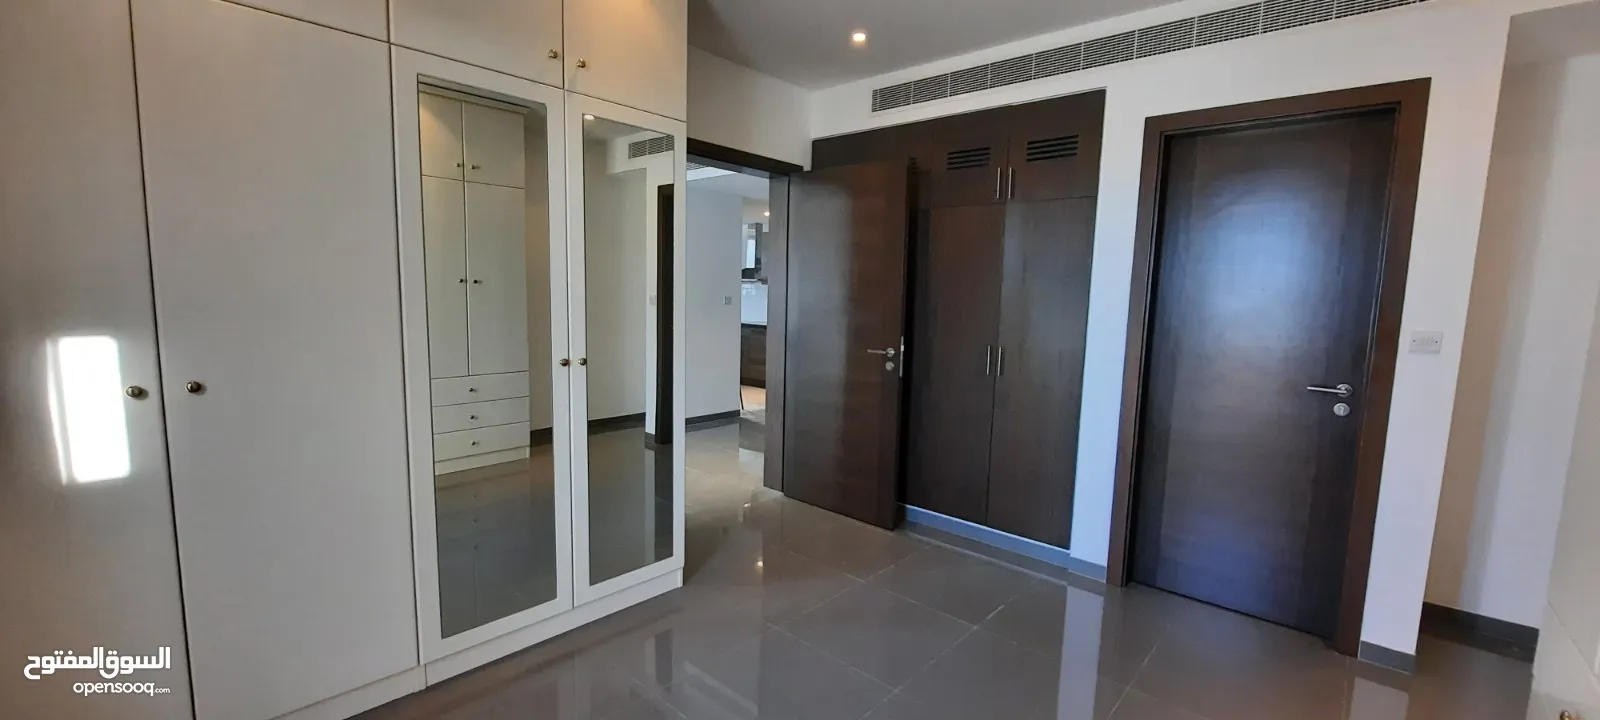 2 bedroom apartment in al mouj & 5 bedroom villa in mqu for rent in excellent locations